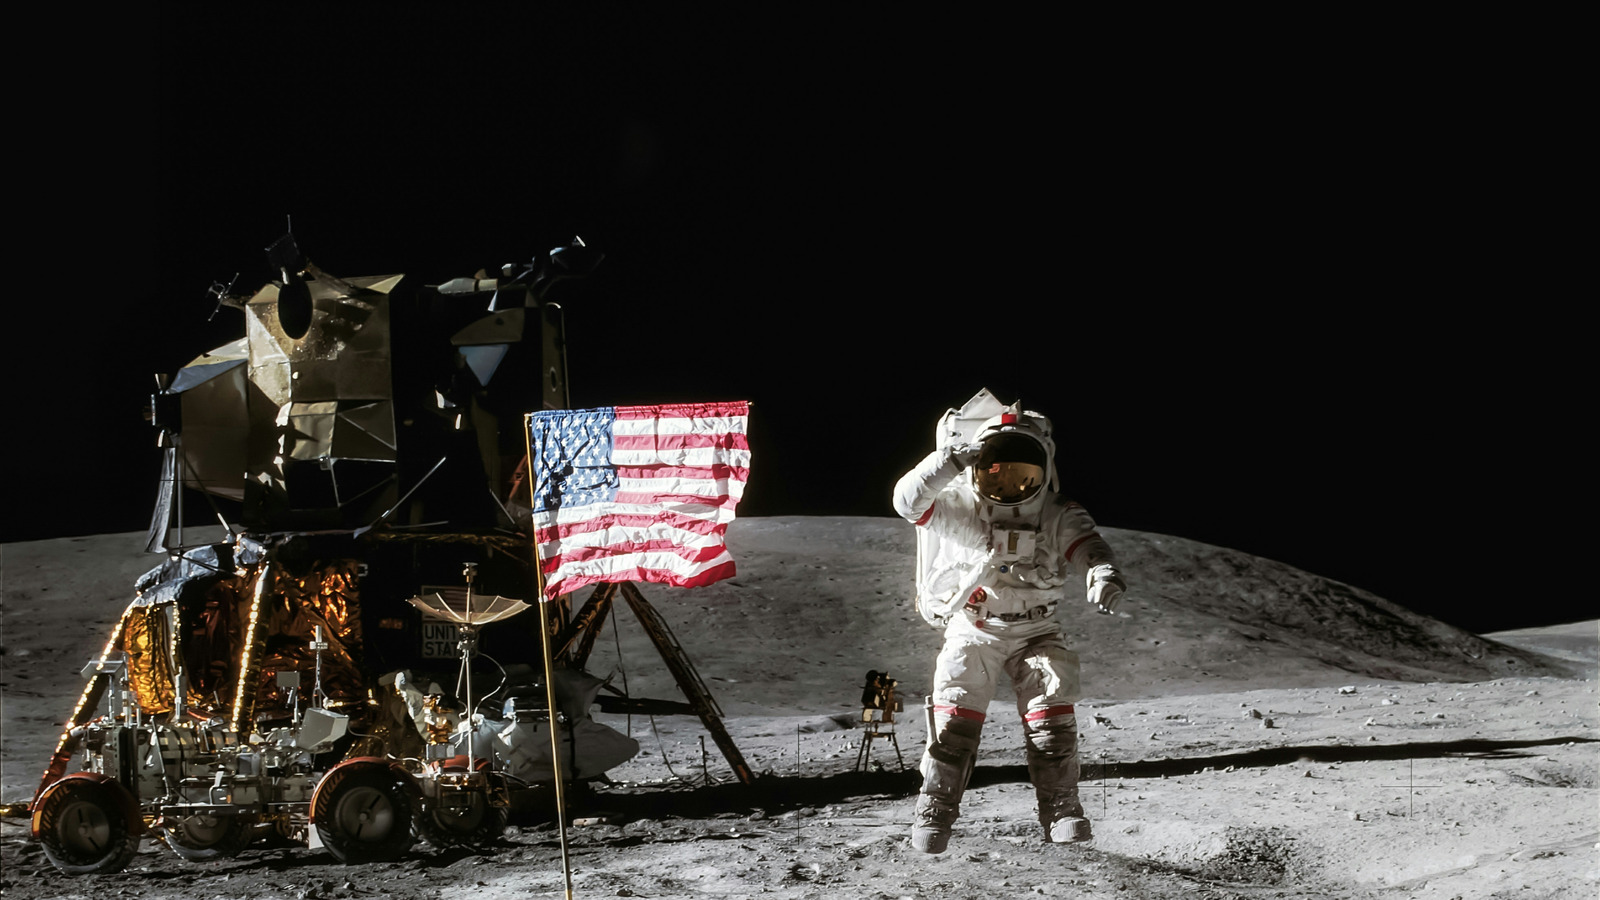 Аполлон 16. Фотографии высадки американцев на луну. Астронавты на Луне хоровод. Америка полетела на луну. Man landed on the moon